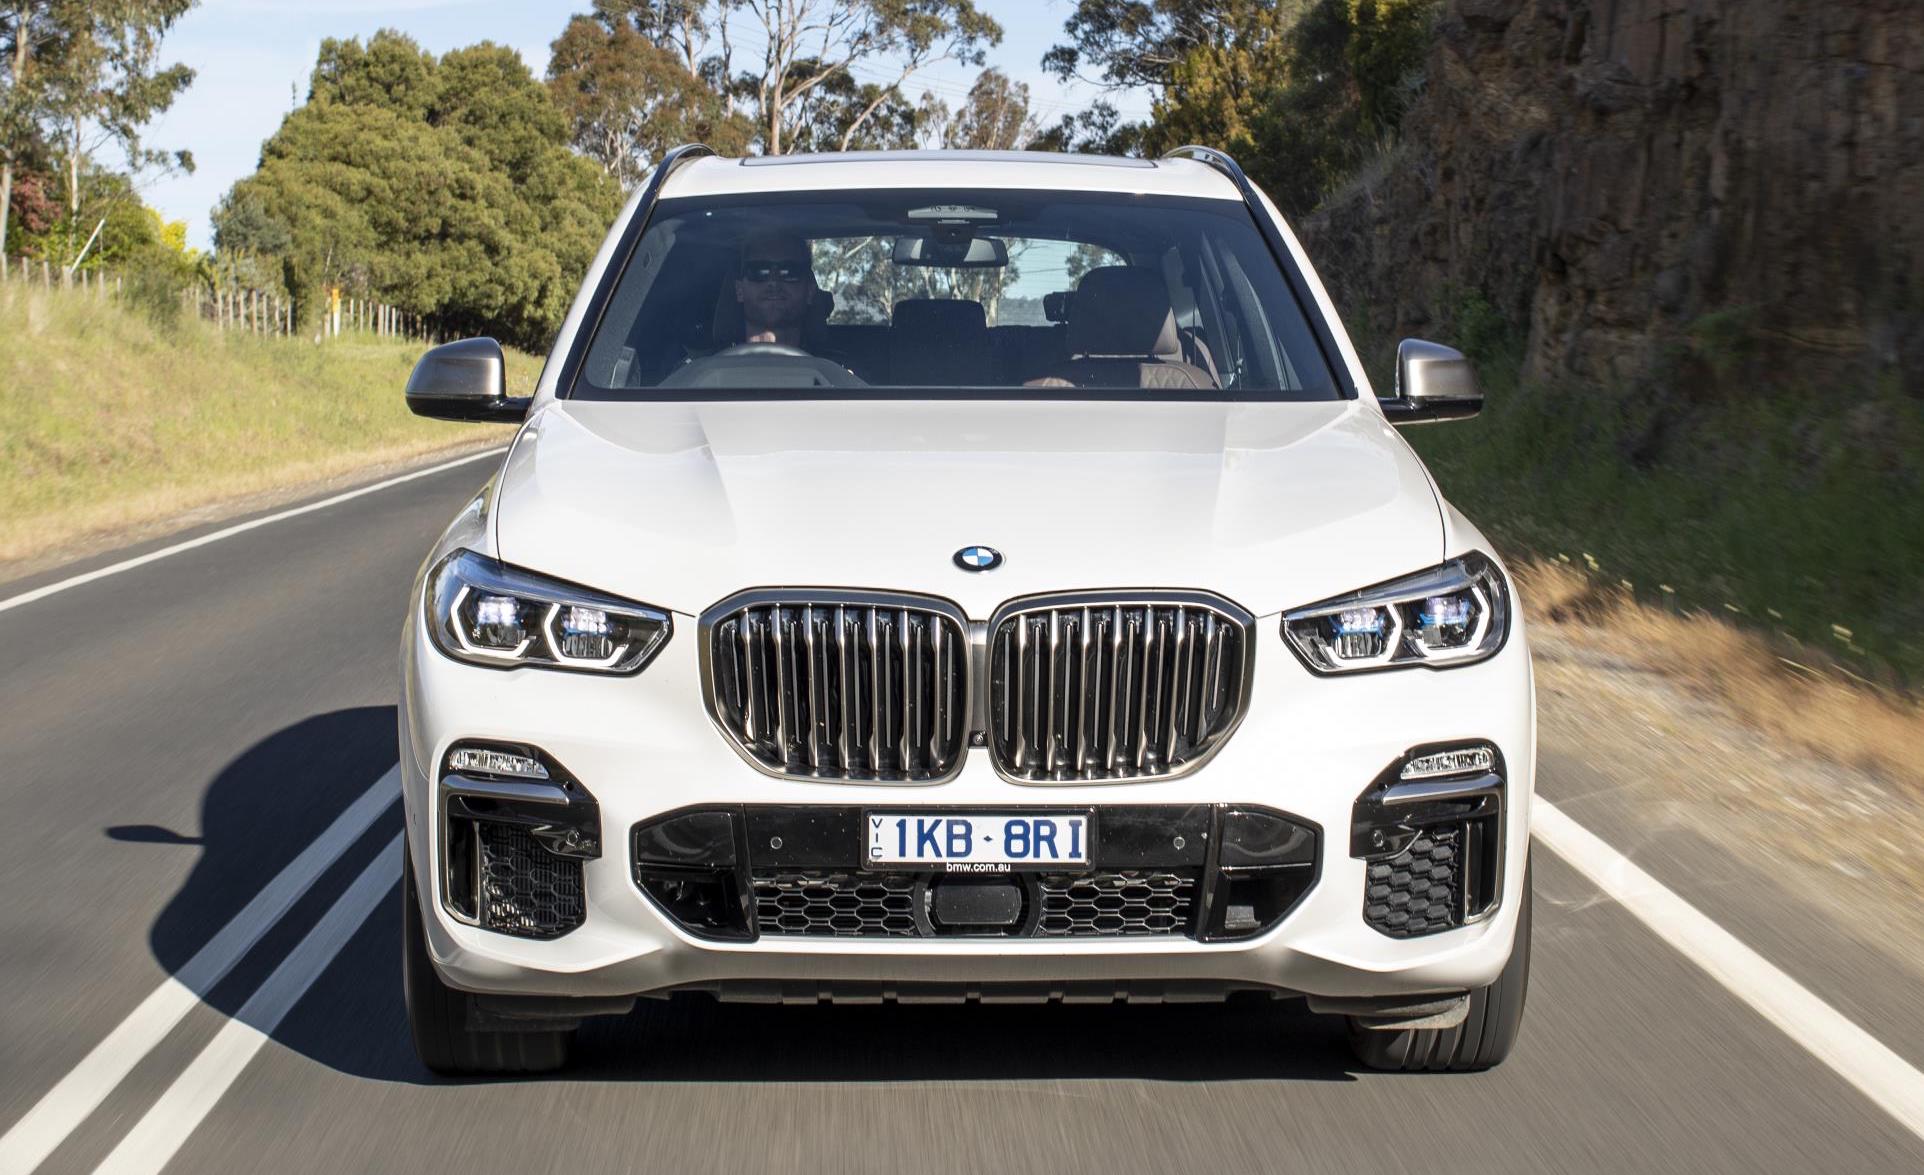 BMW sales rise in Australia, celebrating 40th anniversary